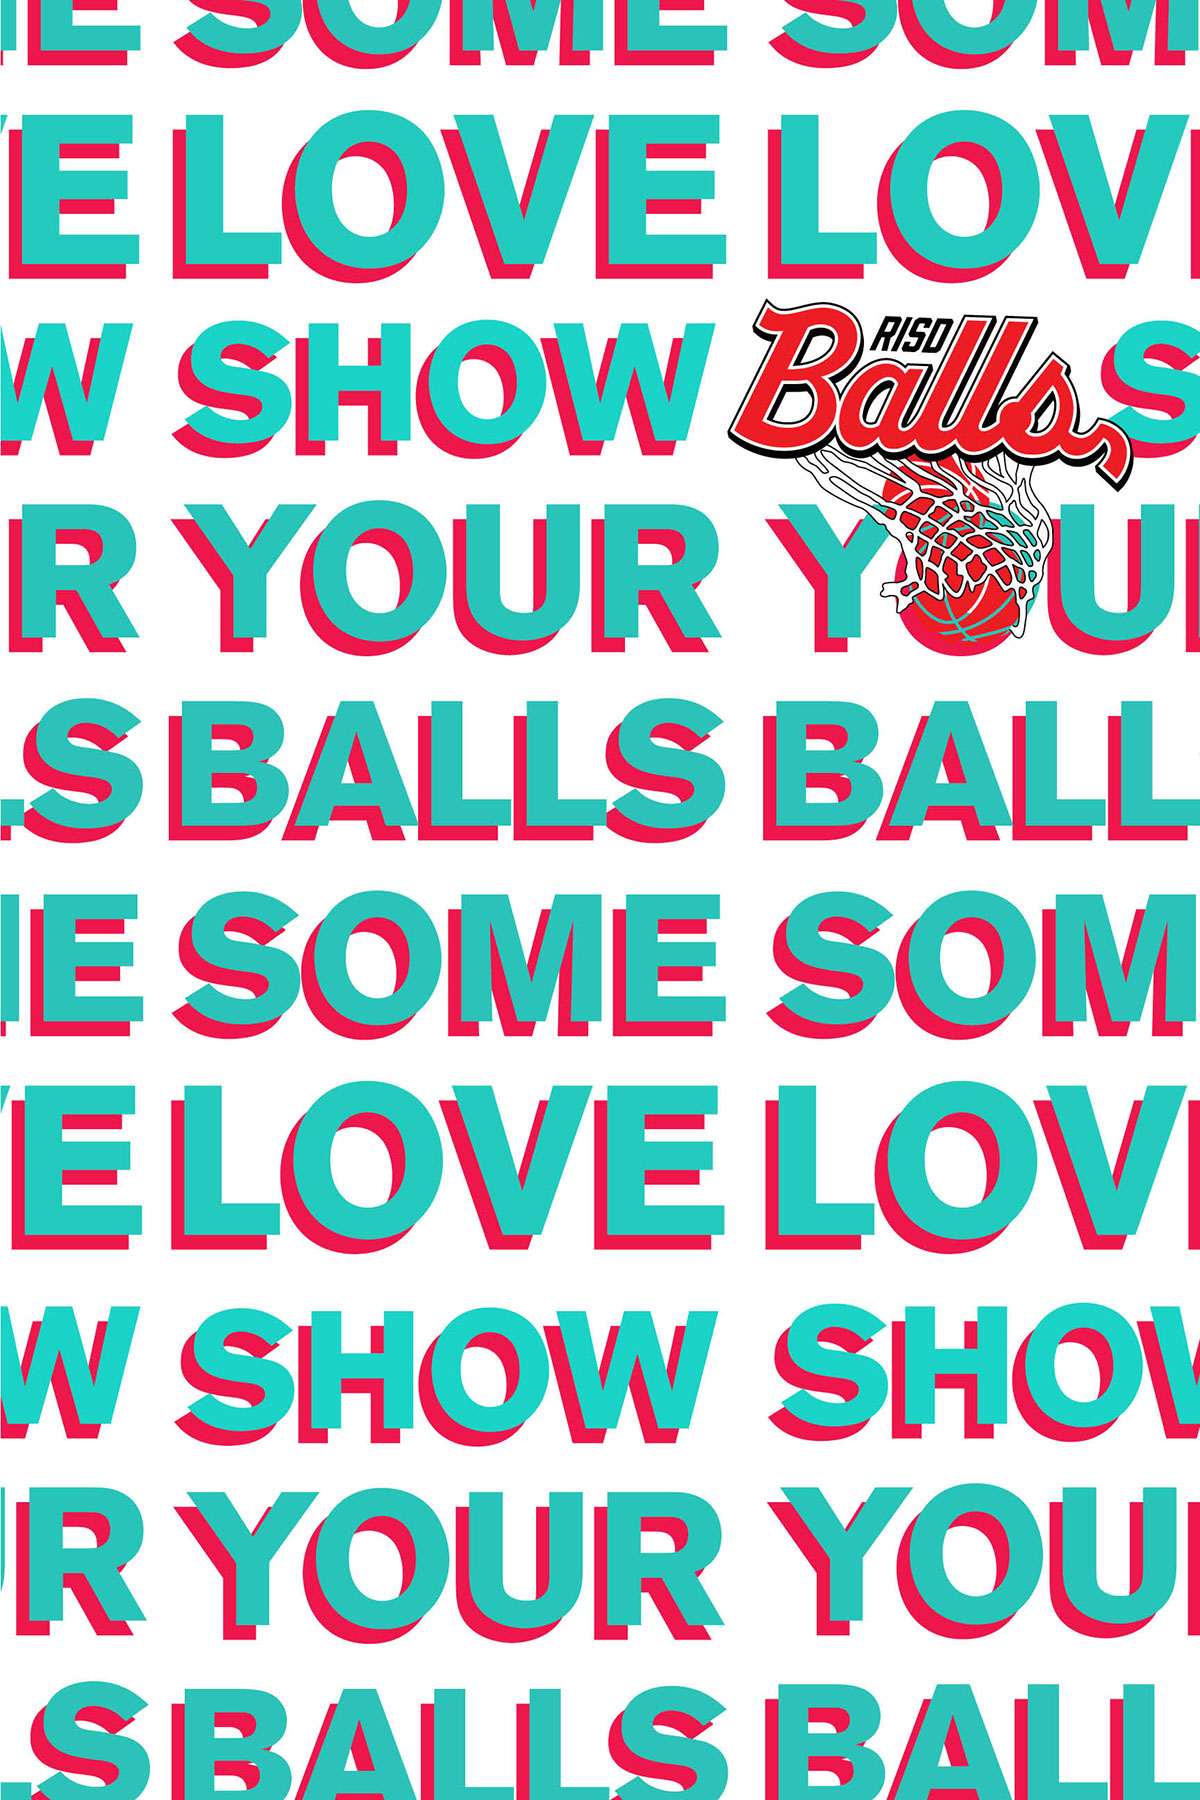 RISD Balls risd Balls Basketball poster promotions balls Balls Ads ads